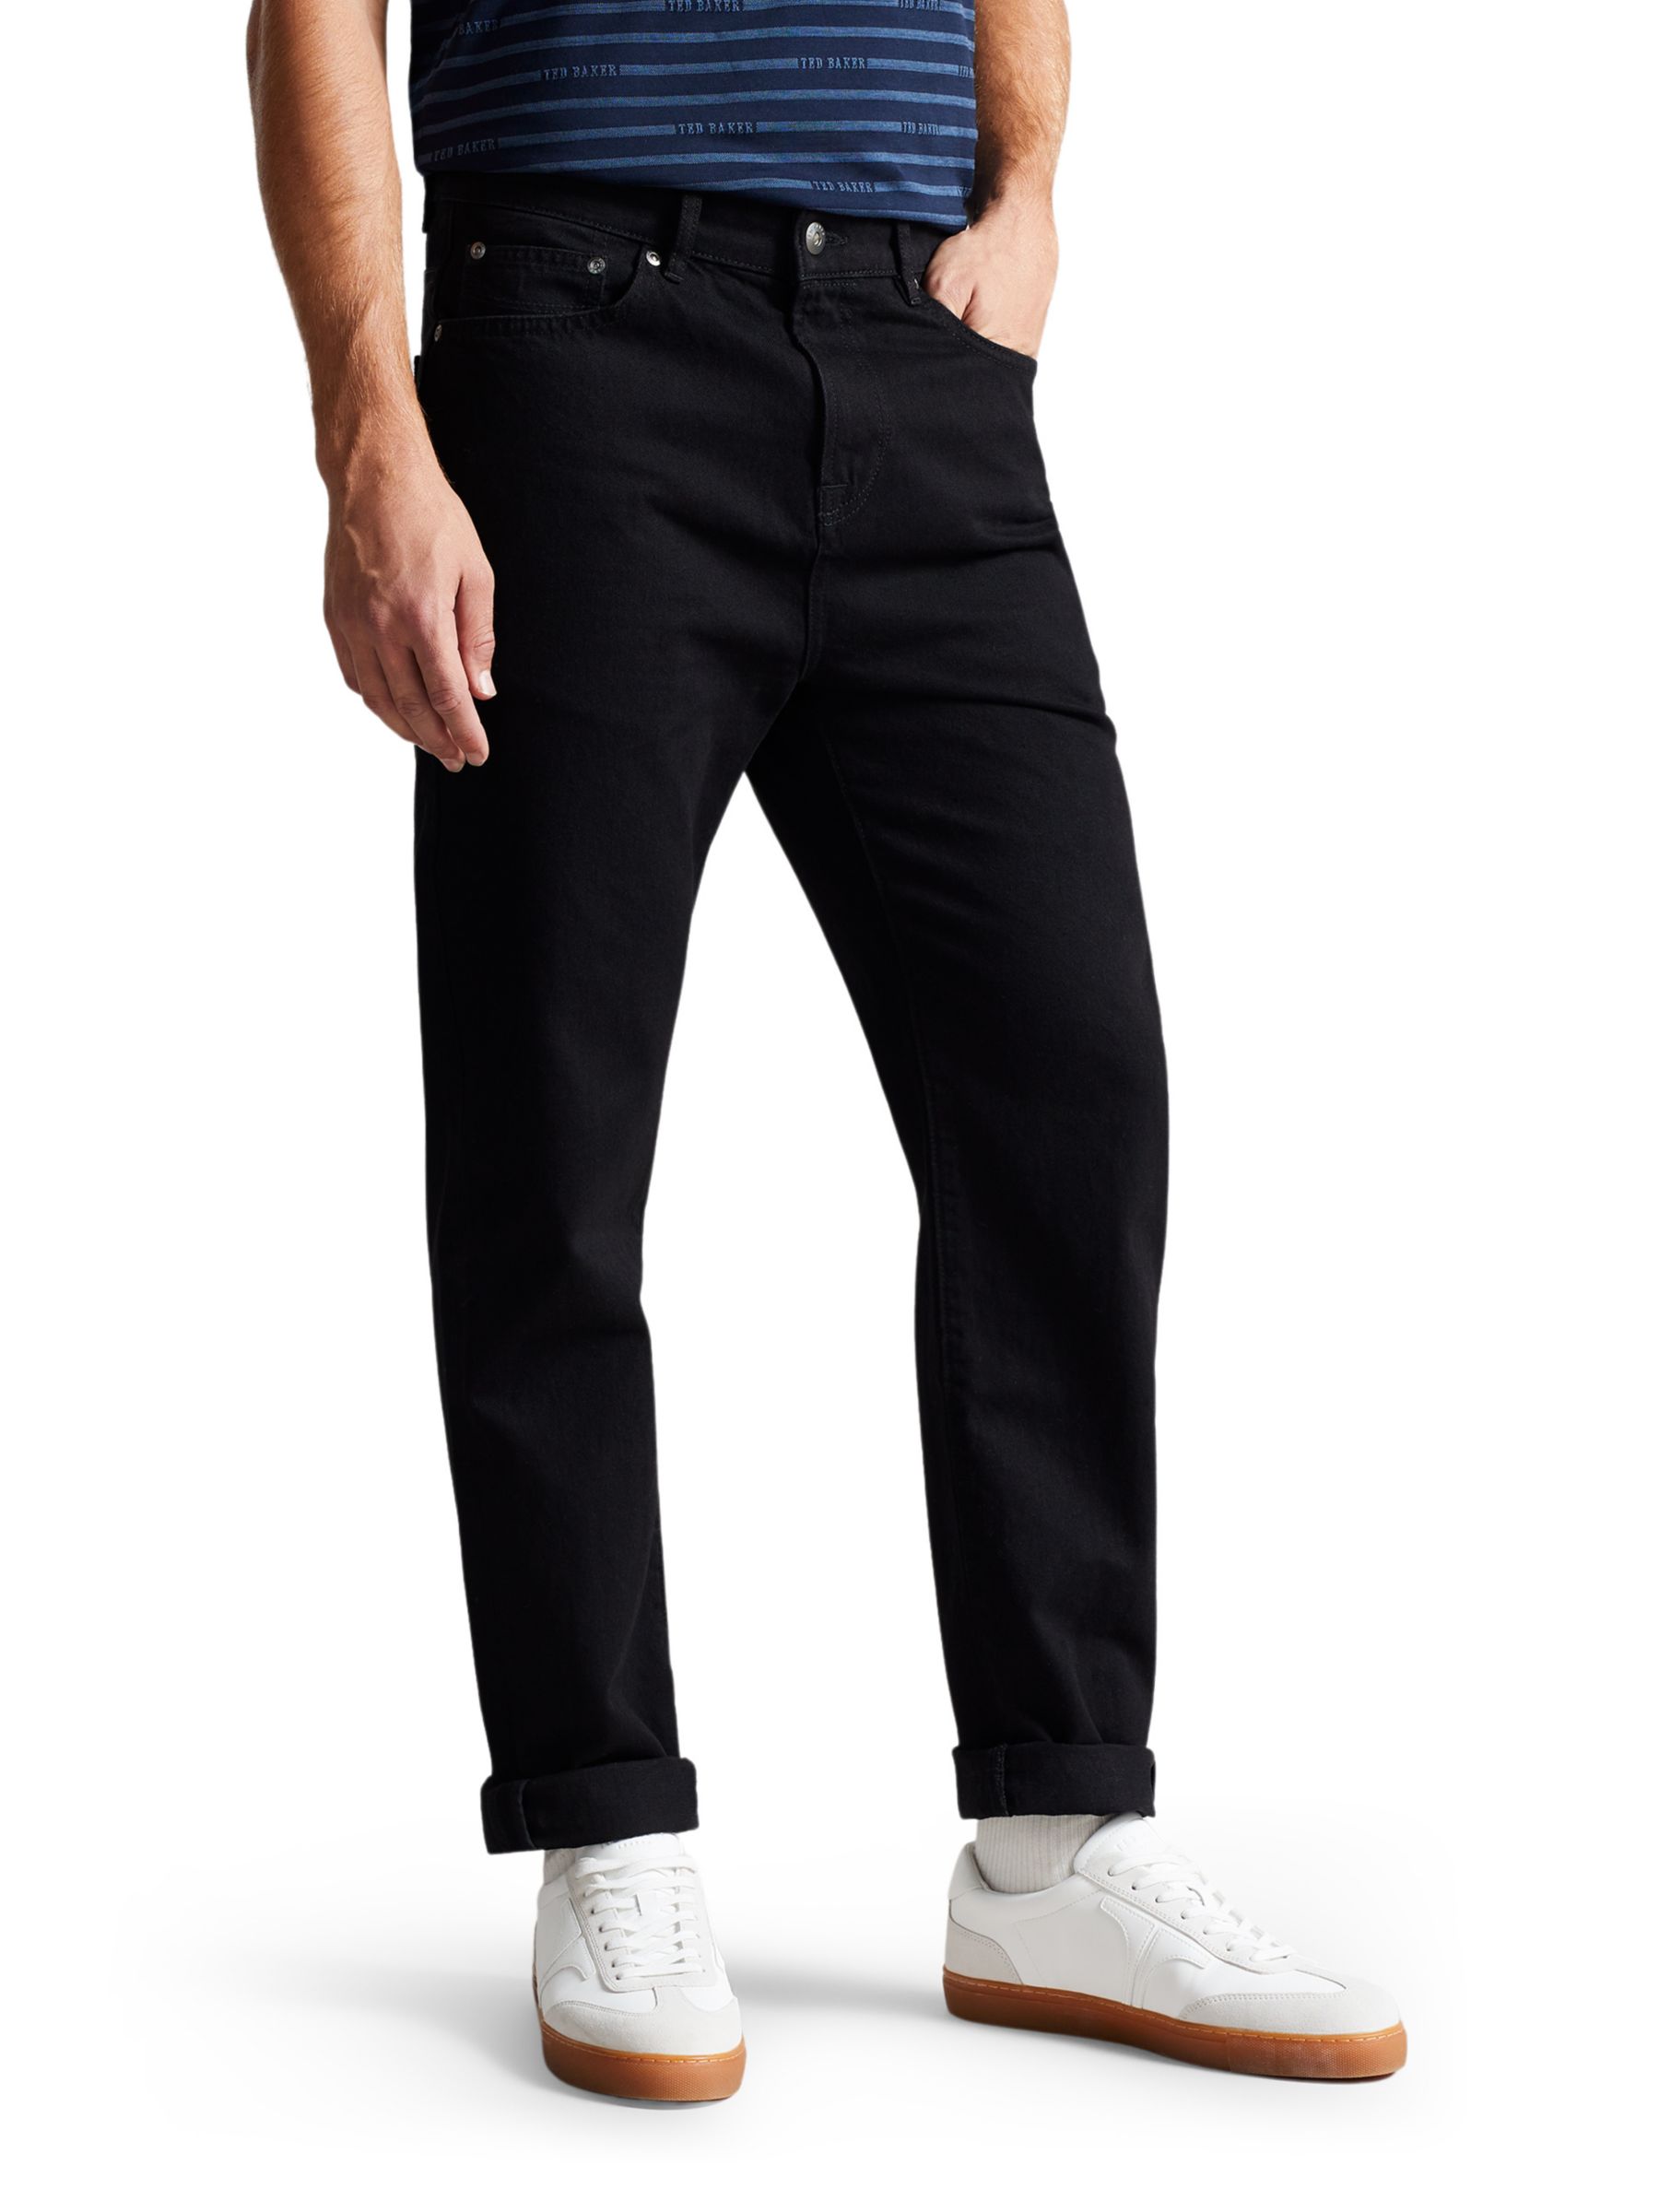 Ted Baker Camdun Slim Jeans, Black at John Lewis & Partners